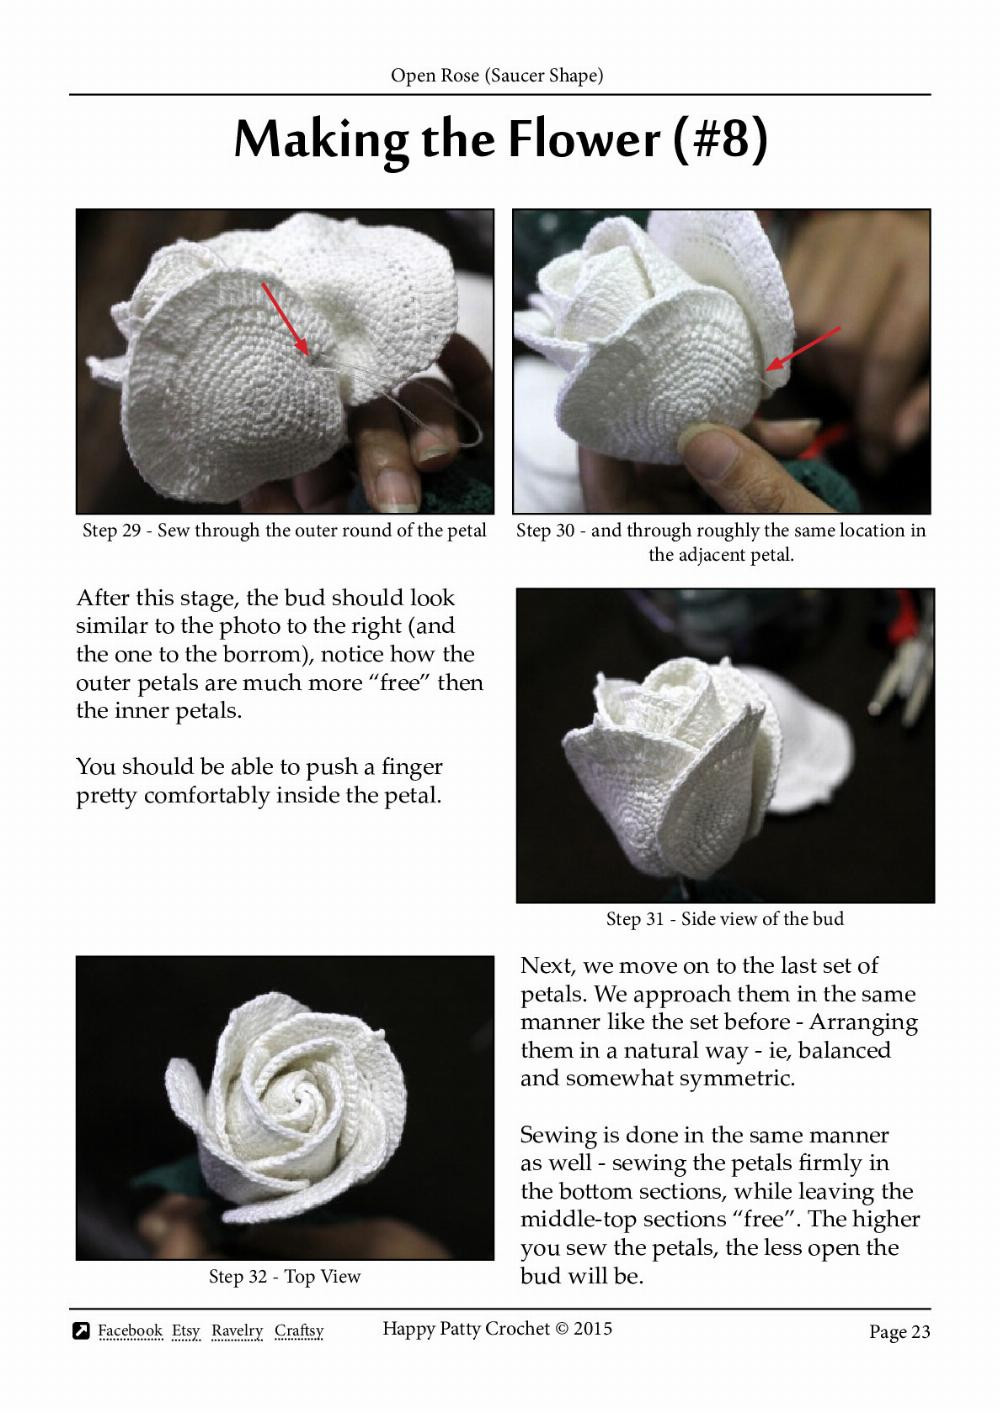 Open Rose (Saucer Shape) crochet pattern